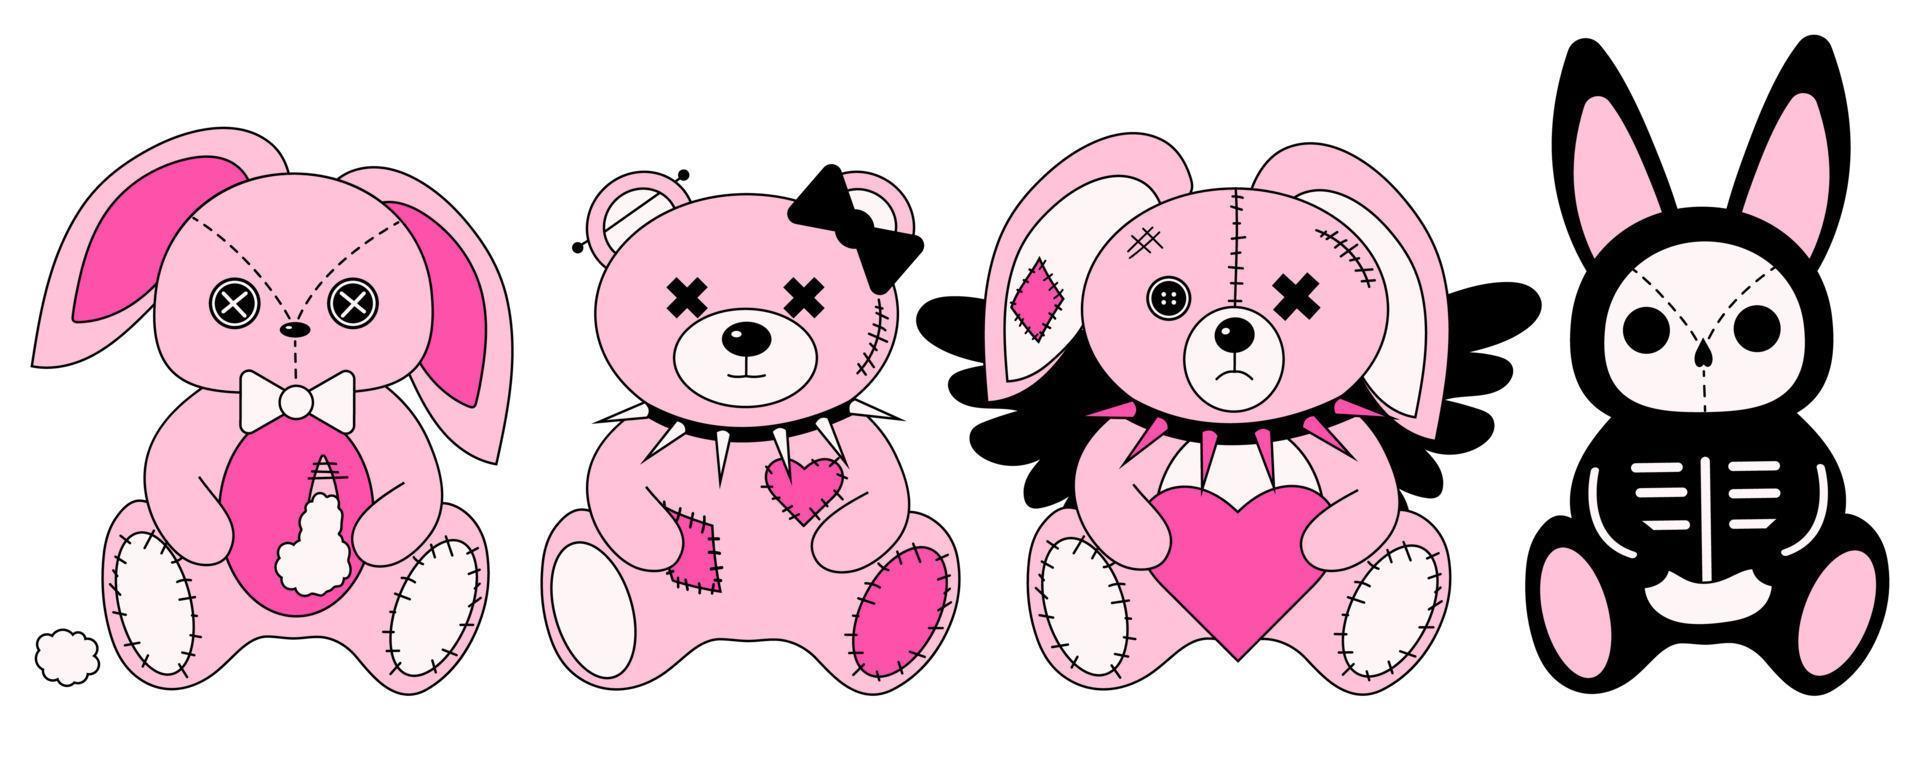 2000s emo girl kawaii bunny and teddy bear sticker set. Y2K, 90s glamour aestetic. Cartoon character vector